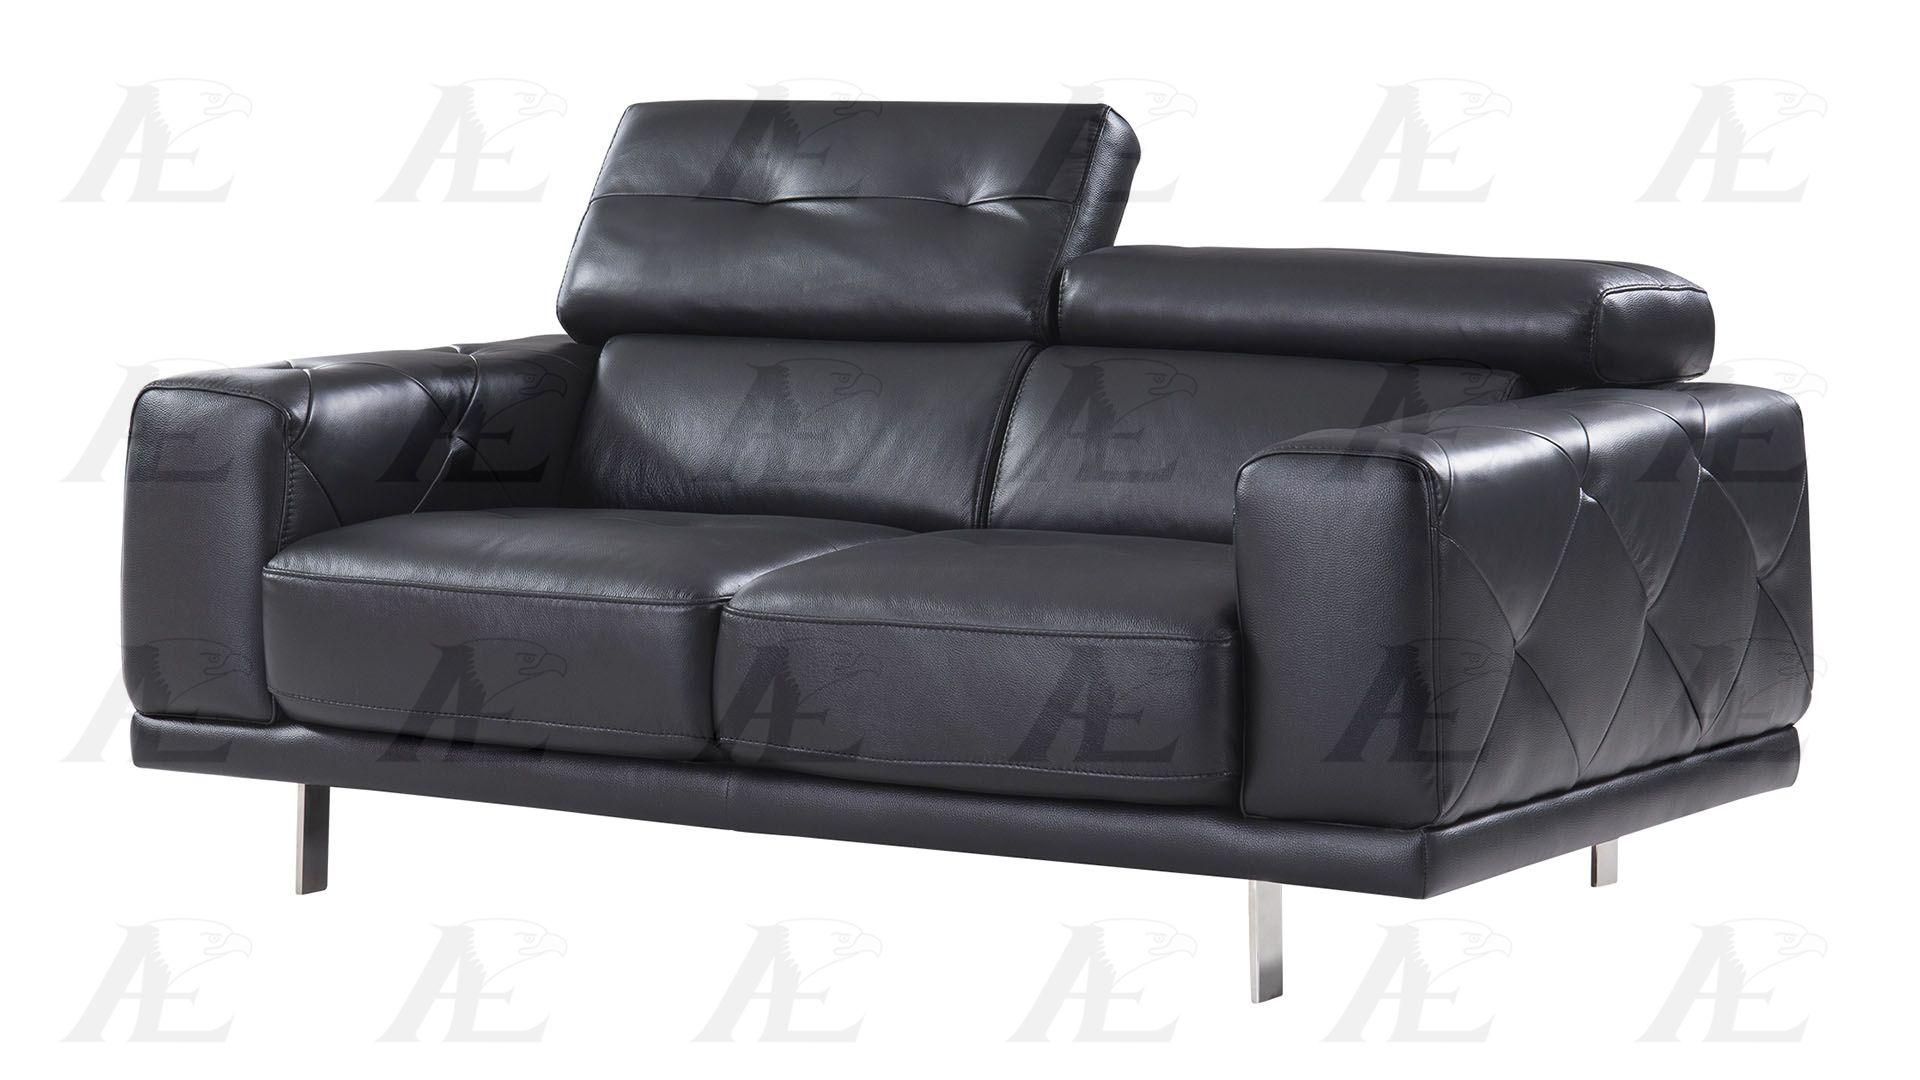 

    
EK039-BK Set-2 American Eagle Furniture Sofa and Loveseat Set
